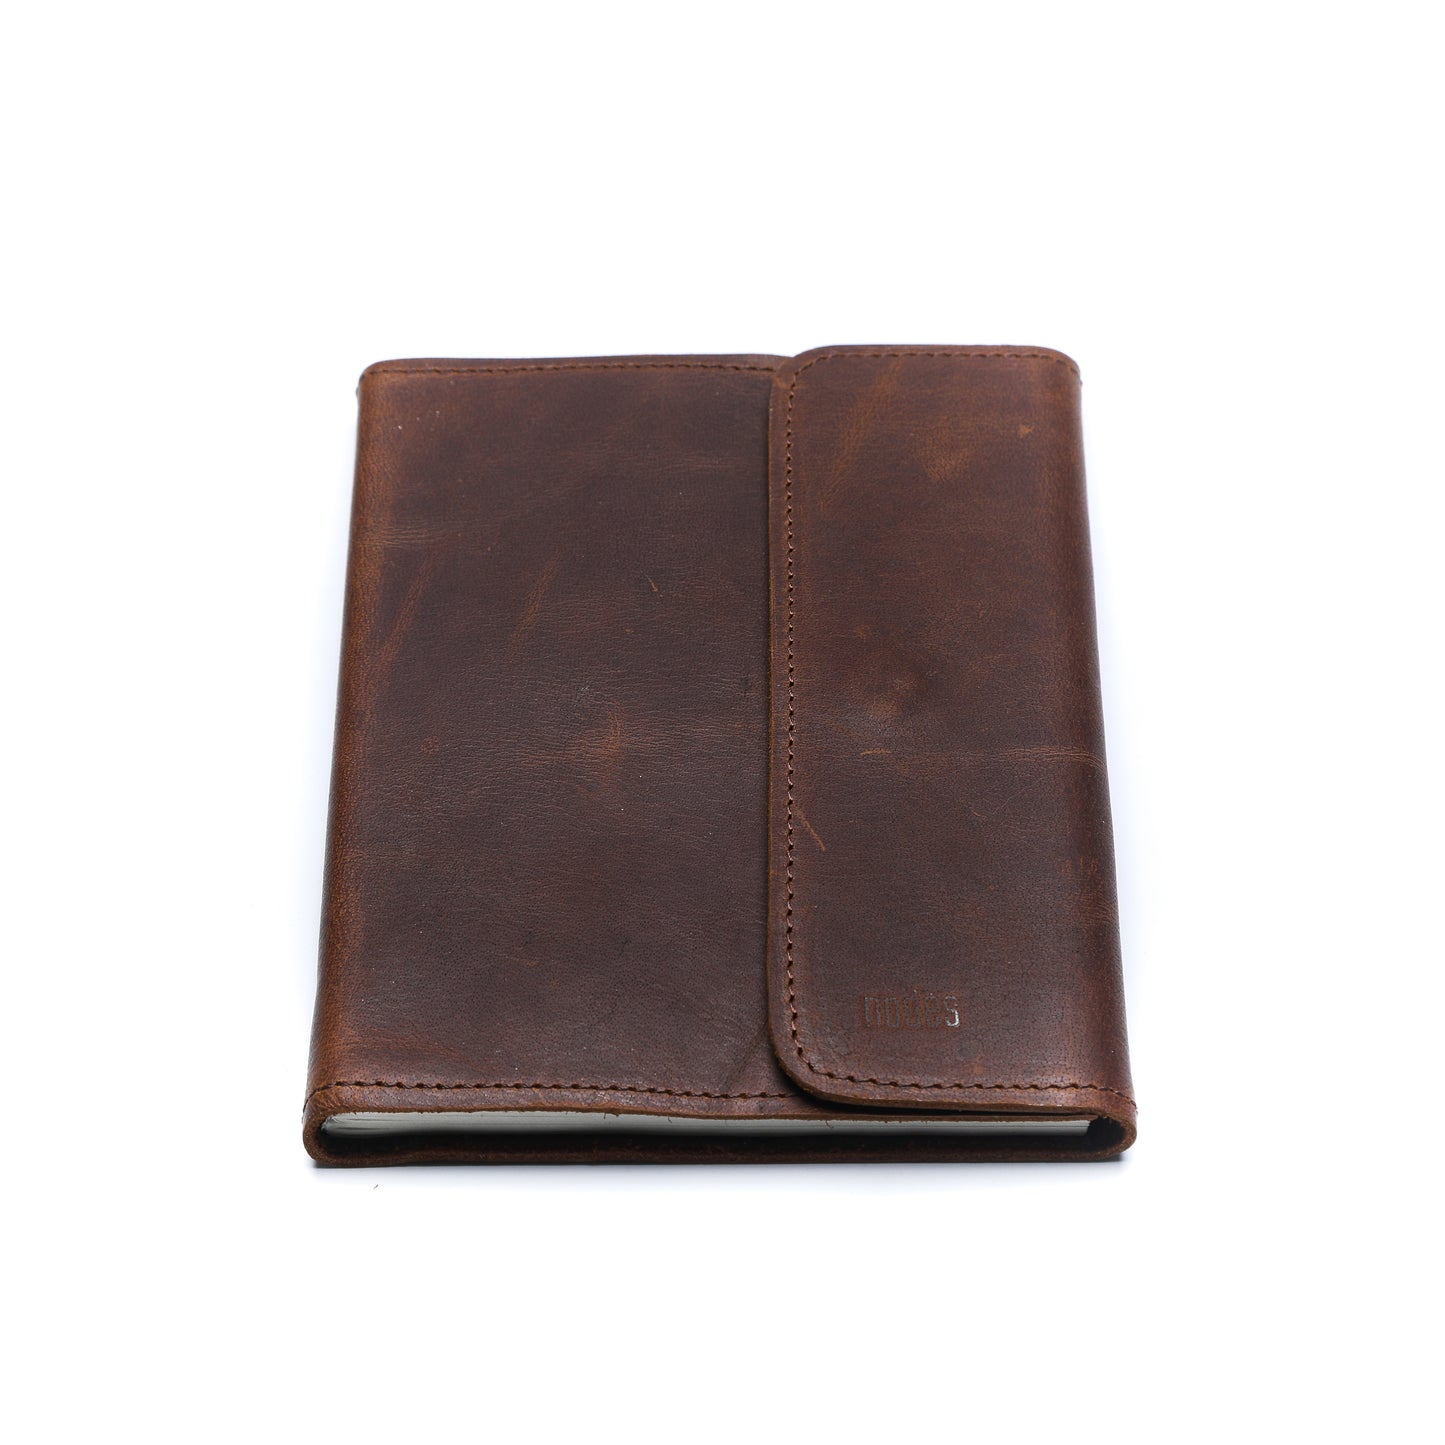 Memento - Leather Diary